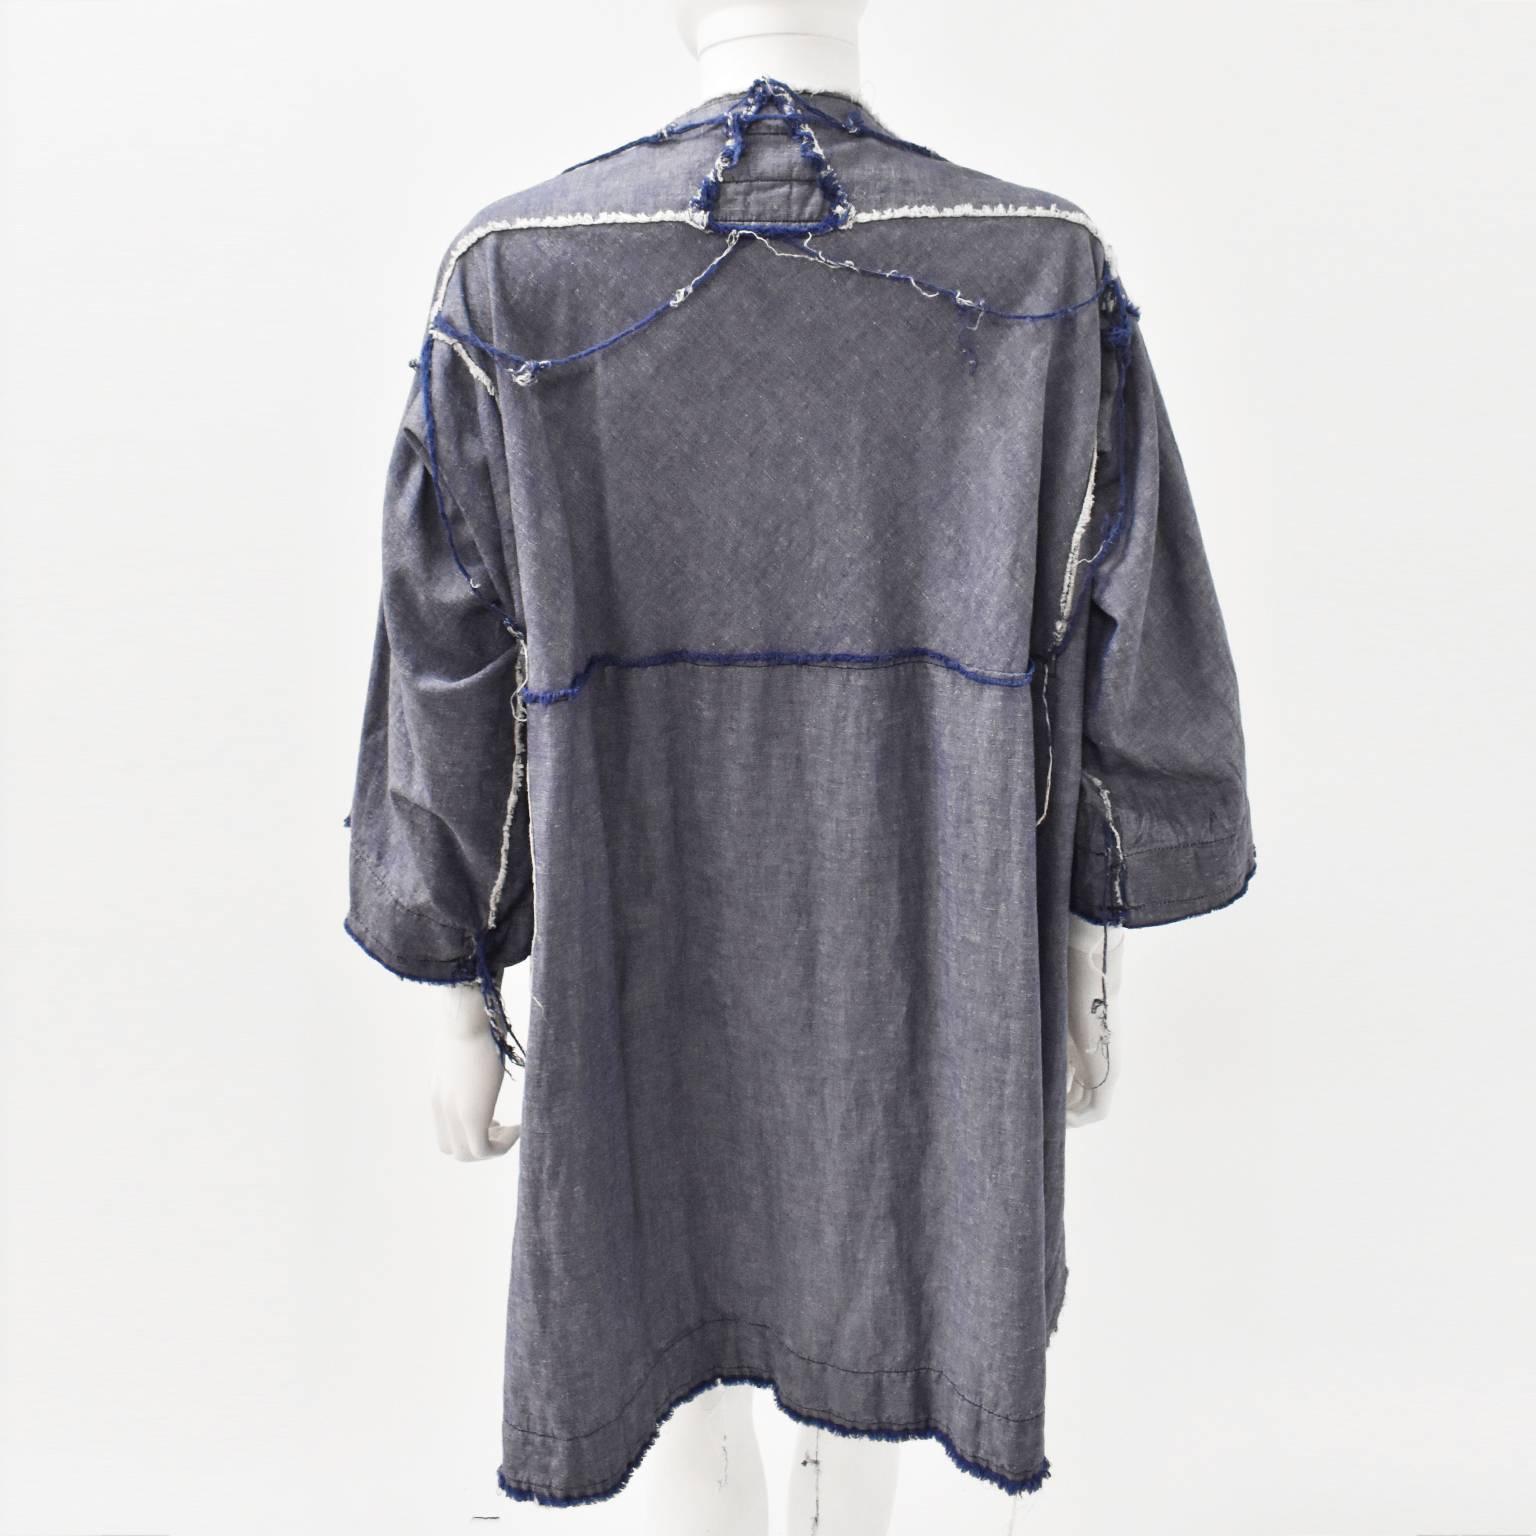 Bernhard Willhelm Deconstructed Oversized Denim Shirt Dress with Raw Edges For Sale 1